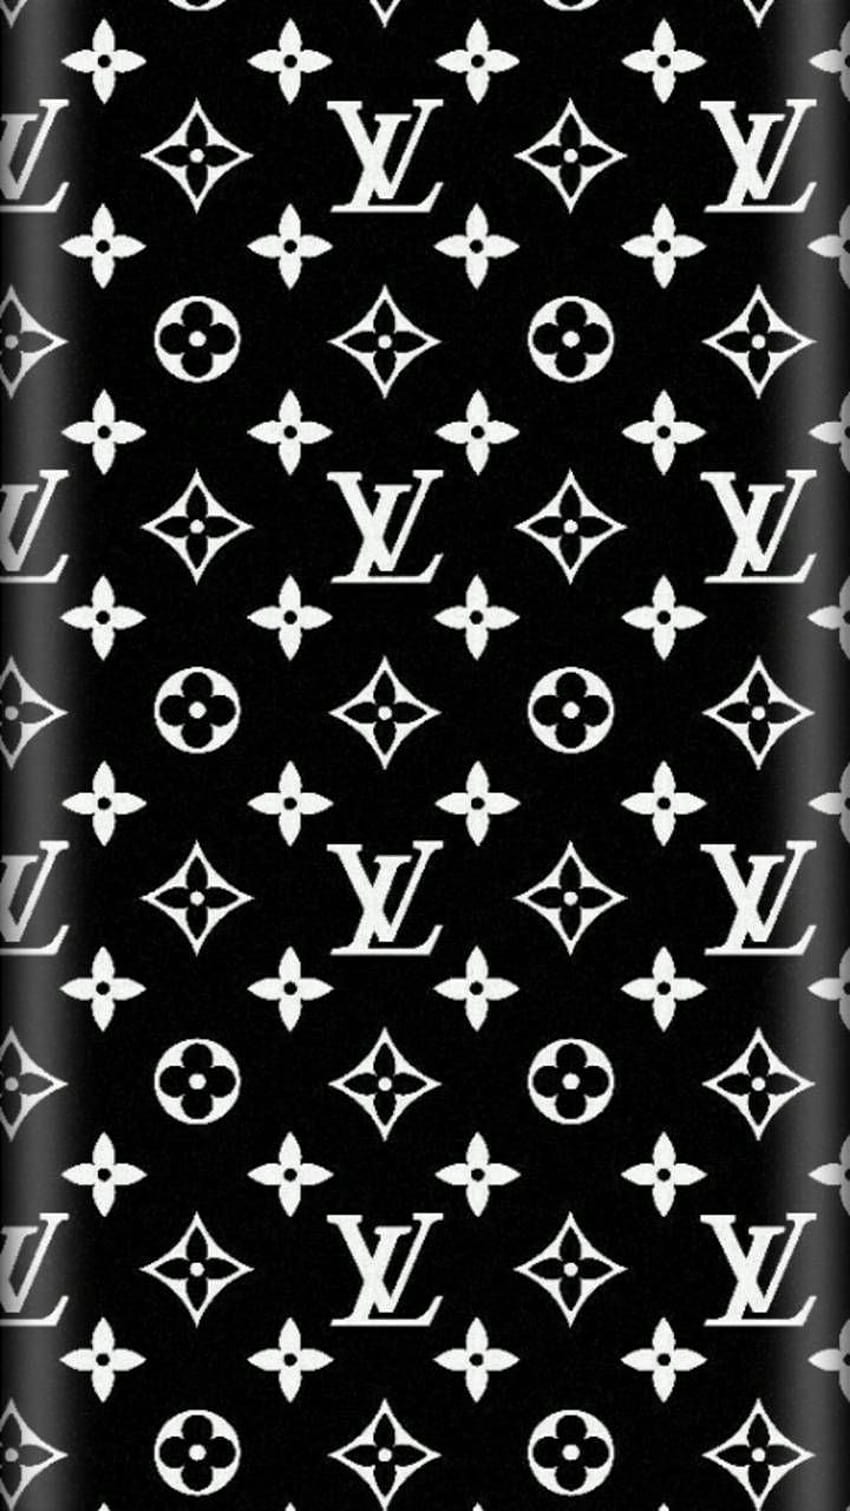 Louis Vuitton wallpaper  Louis vuitton iphone wallpaper, New wallpaper  iphone, Iphone wallpaper